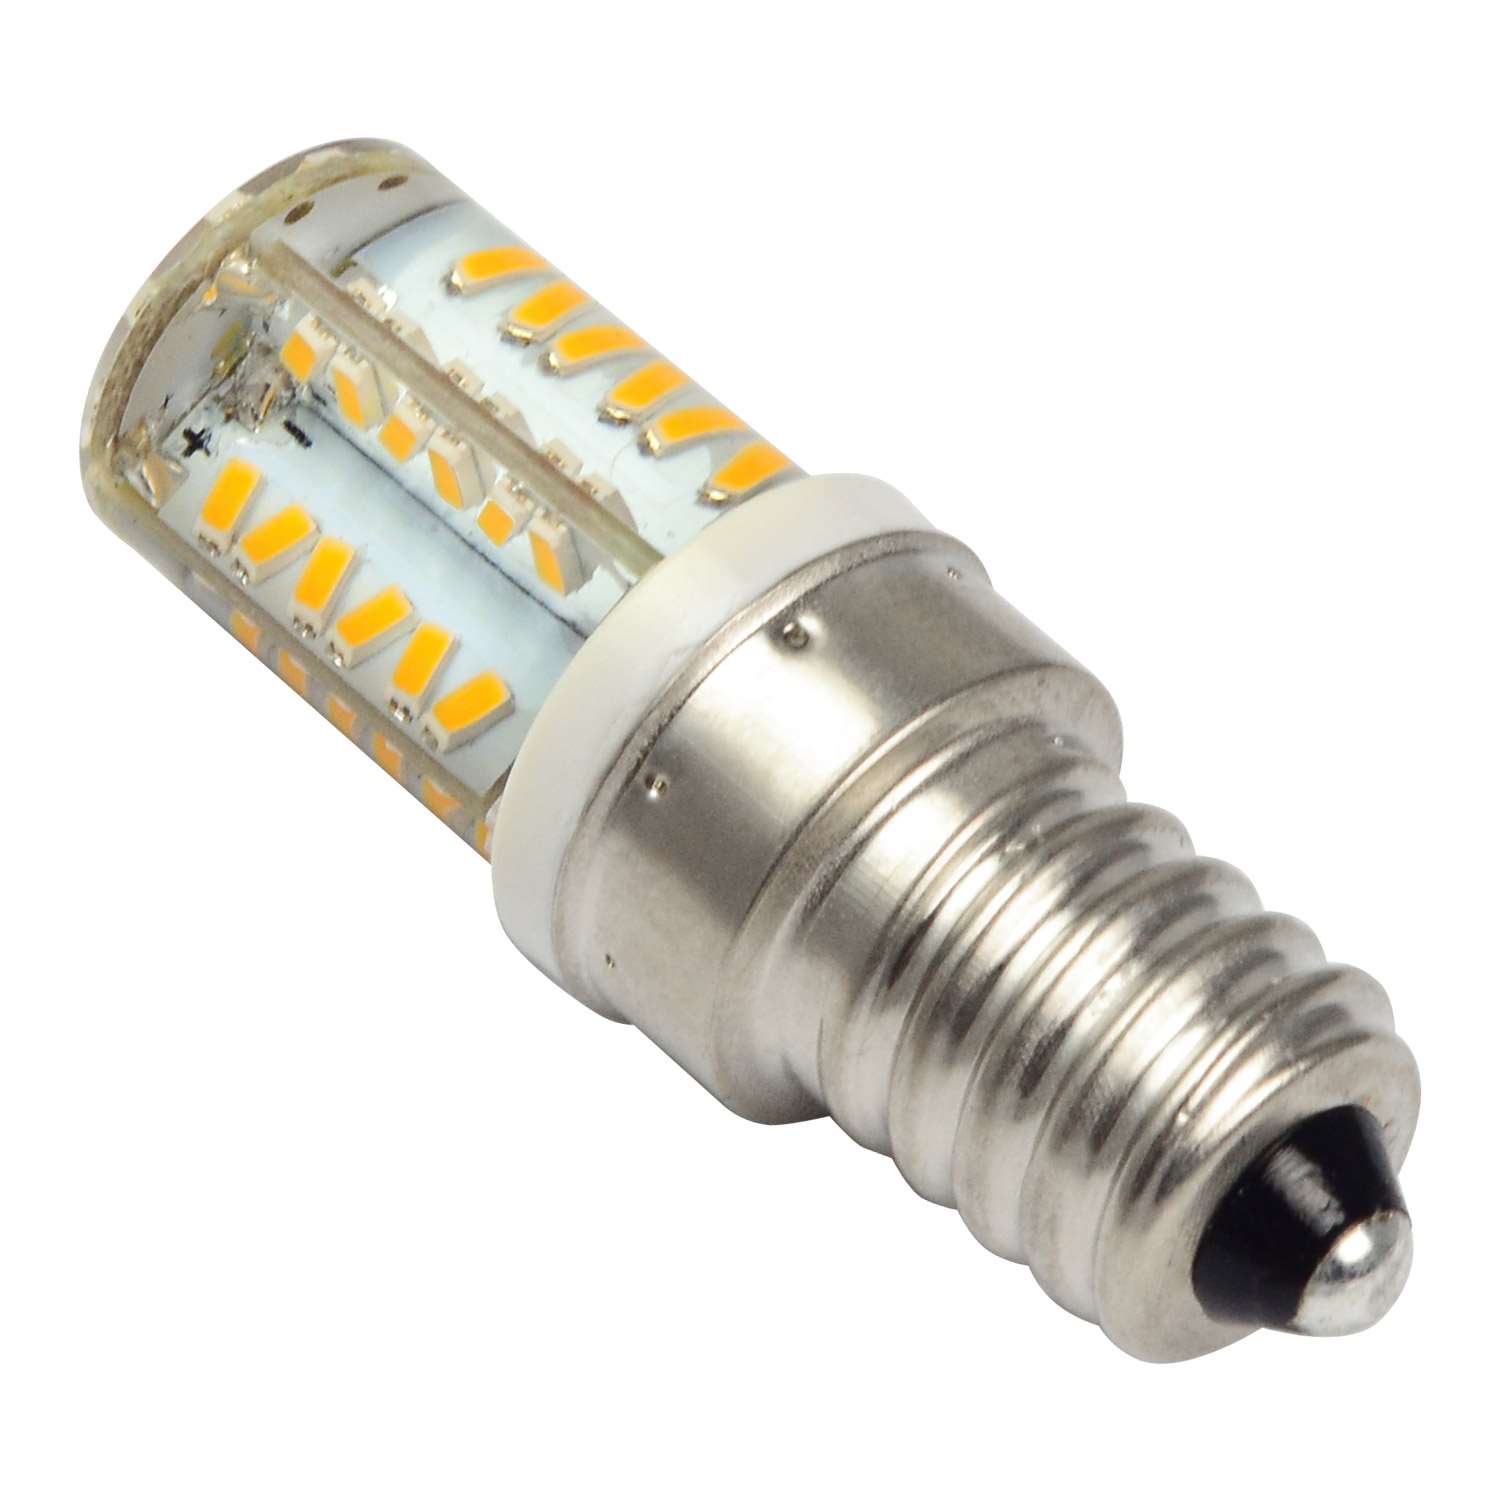 Mengsled Mengs® E14 3w Led Light 58x 3014 Smd Led Bulb Lamp In Warm